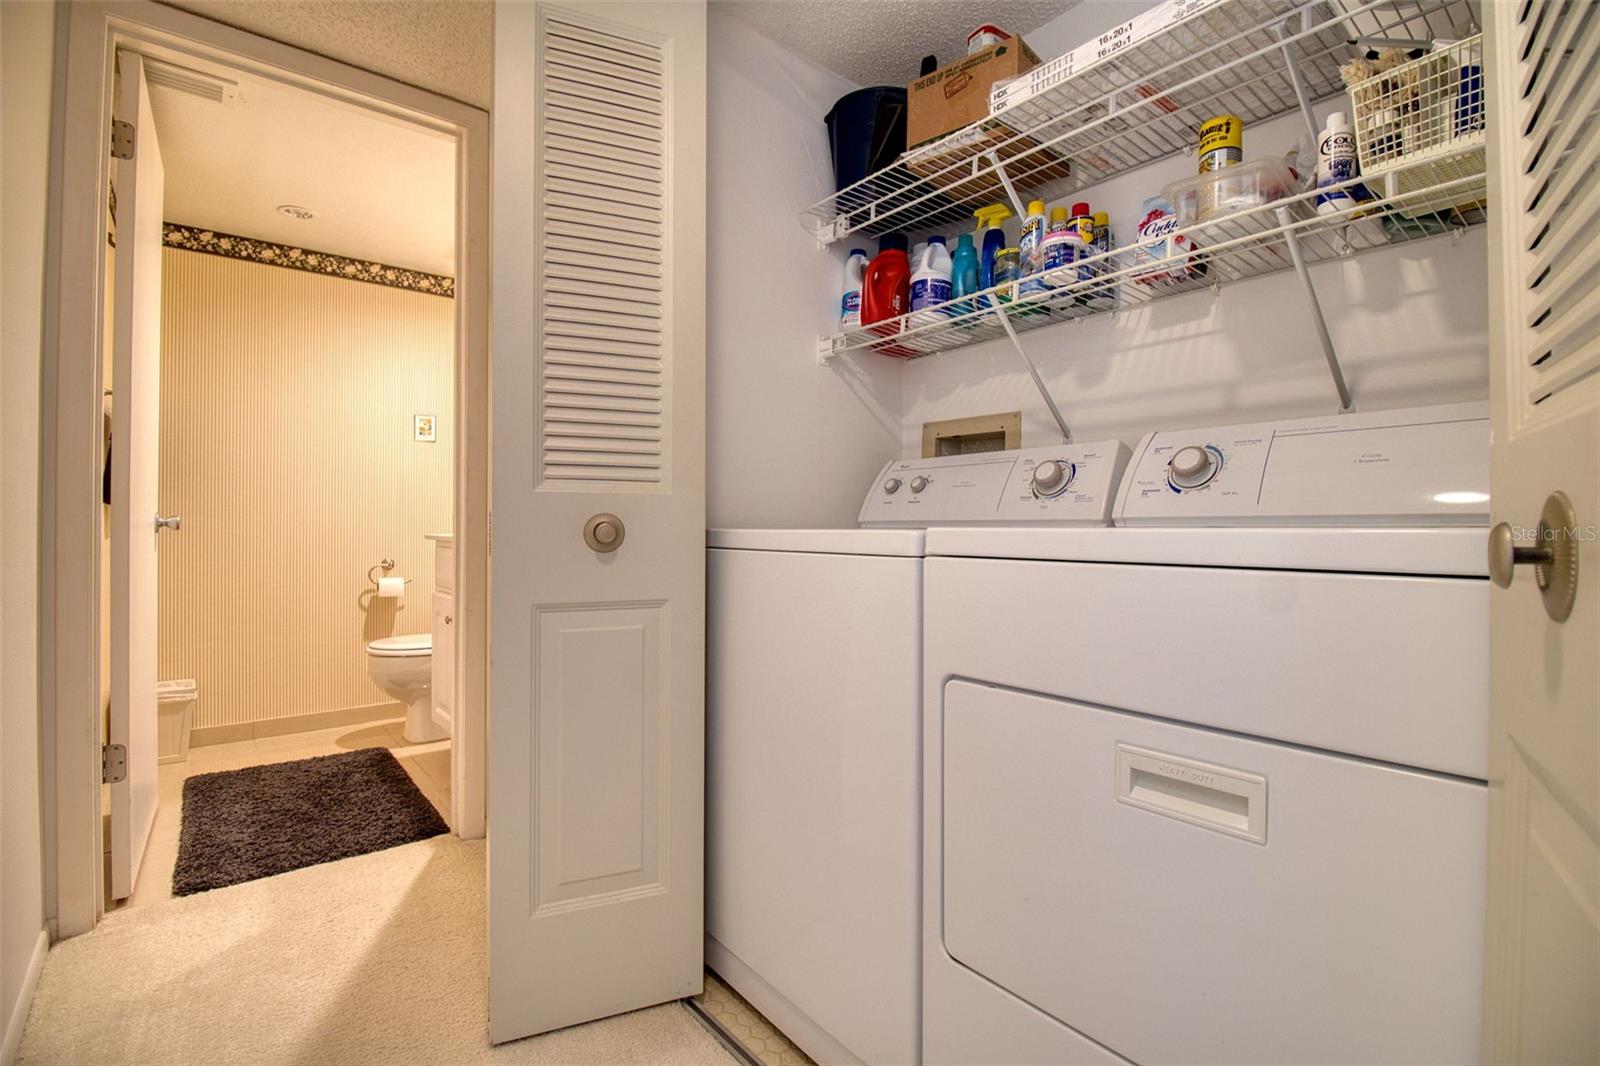 Washer & dryer in hall closet leading to half bath.